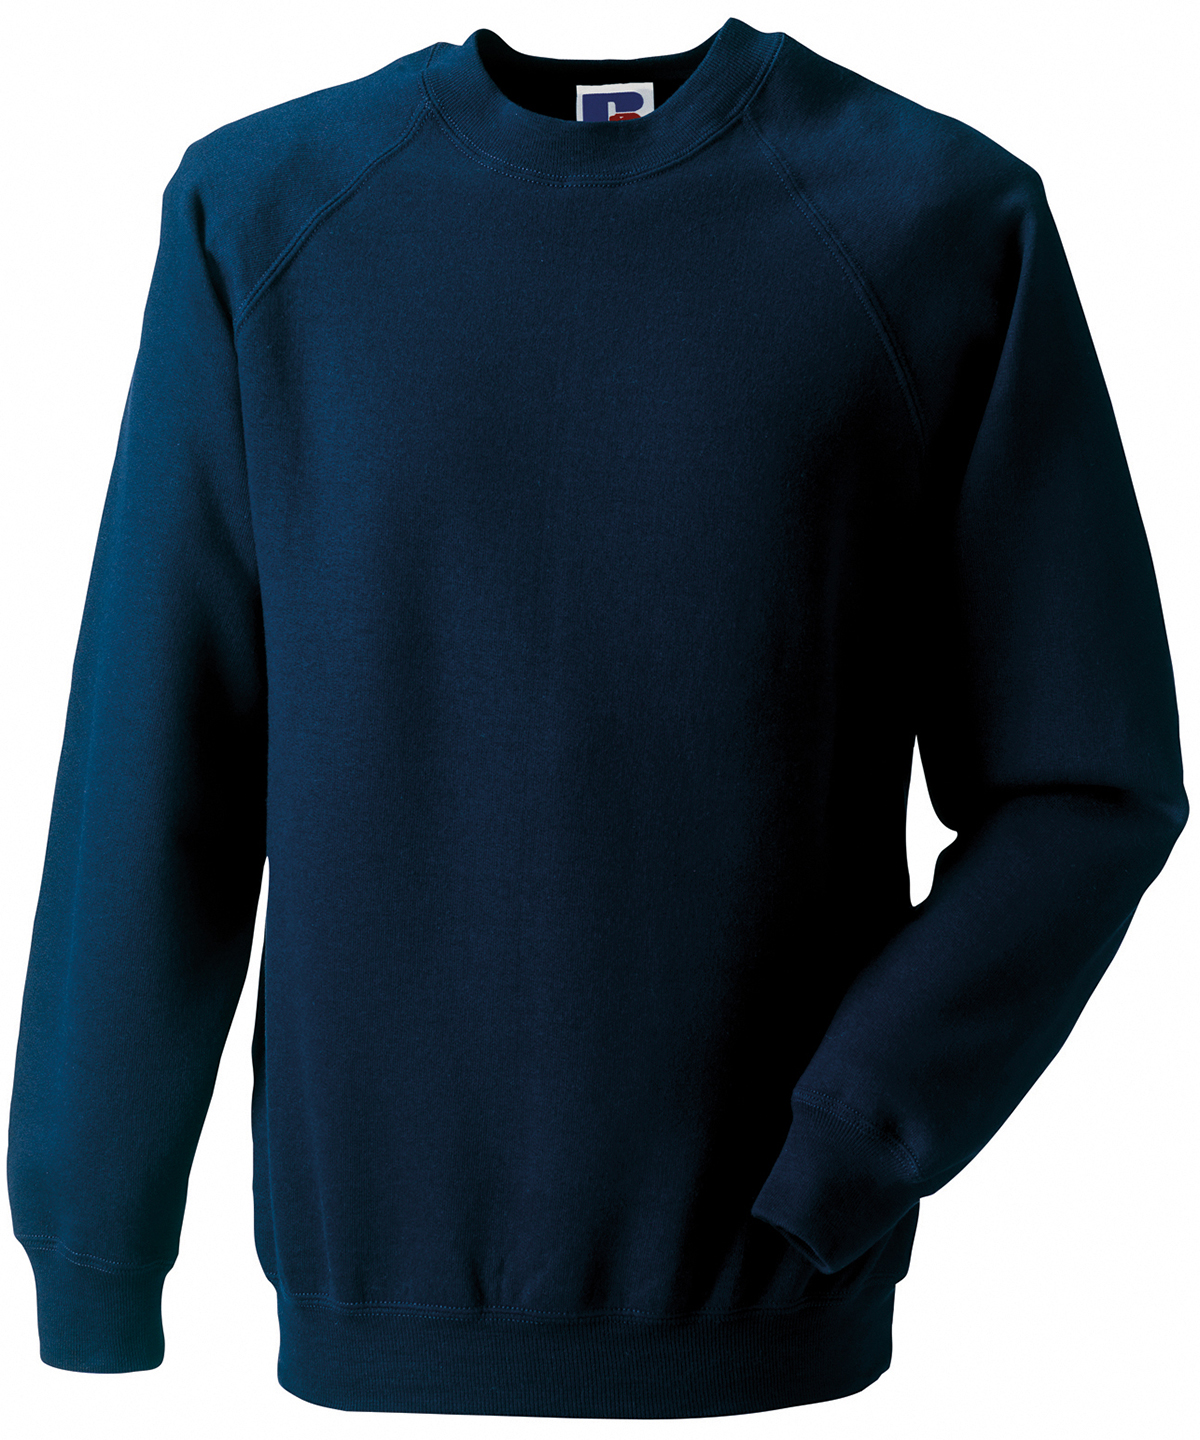 7620M Russell Classic Sweatshirt - Academy Crests